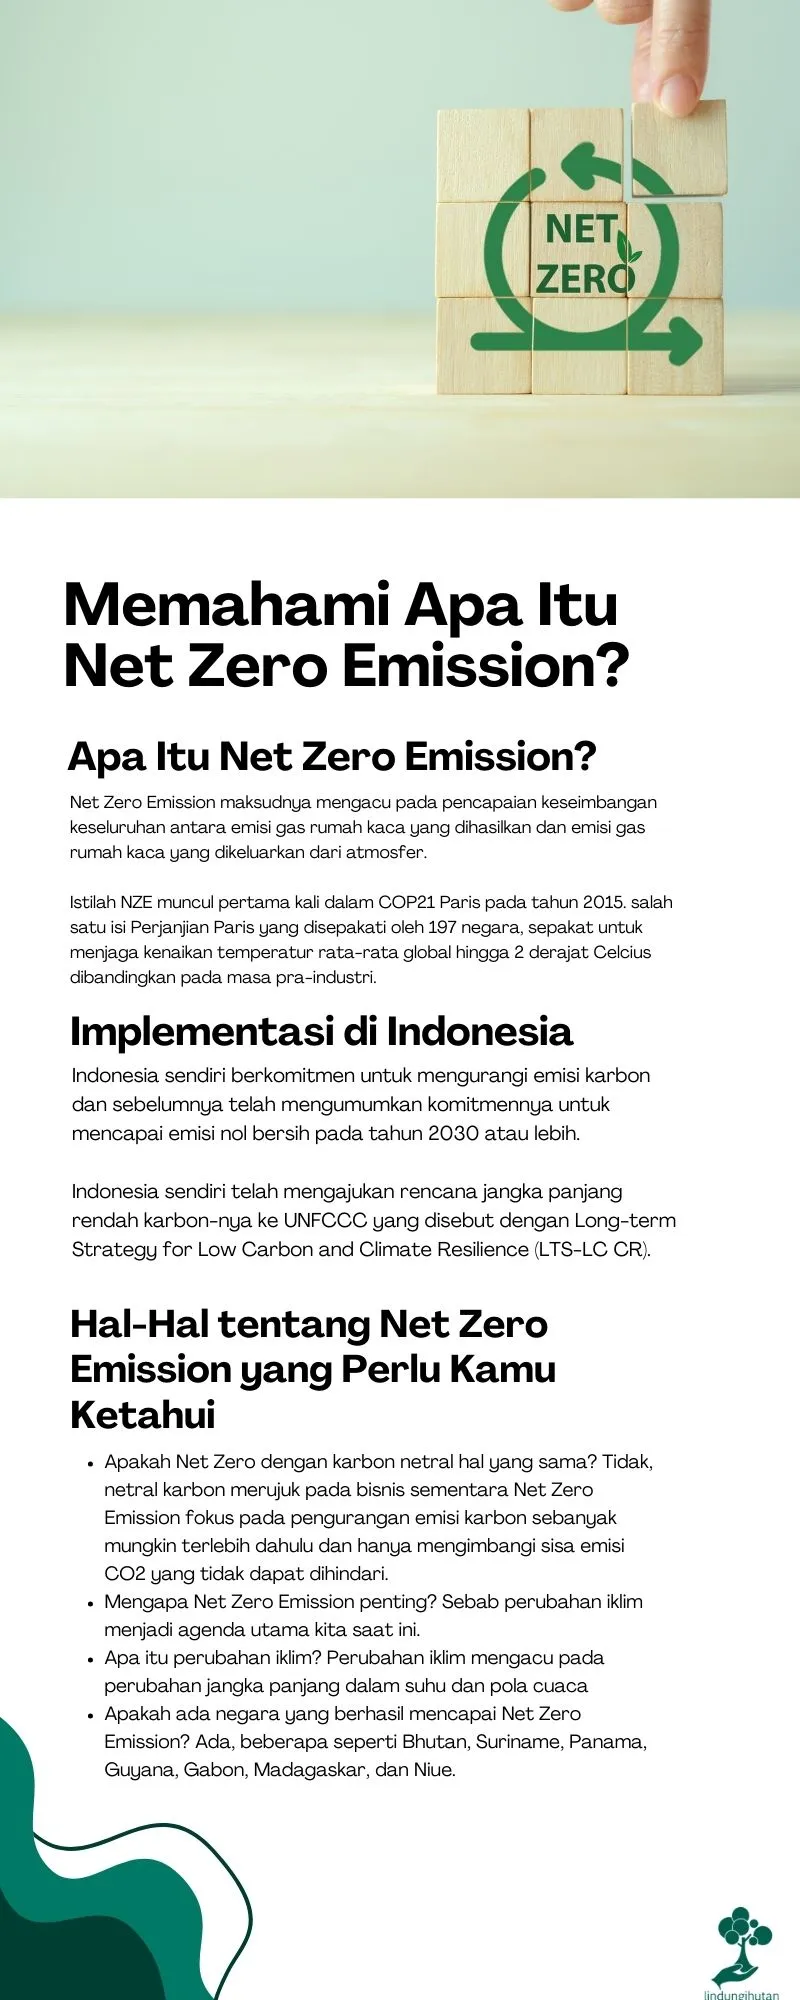 Net Zero Emission